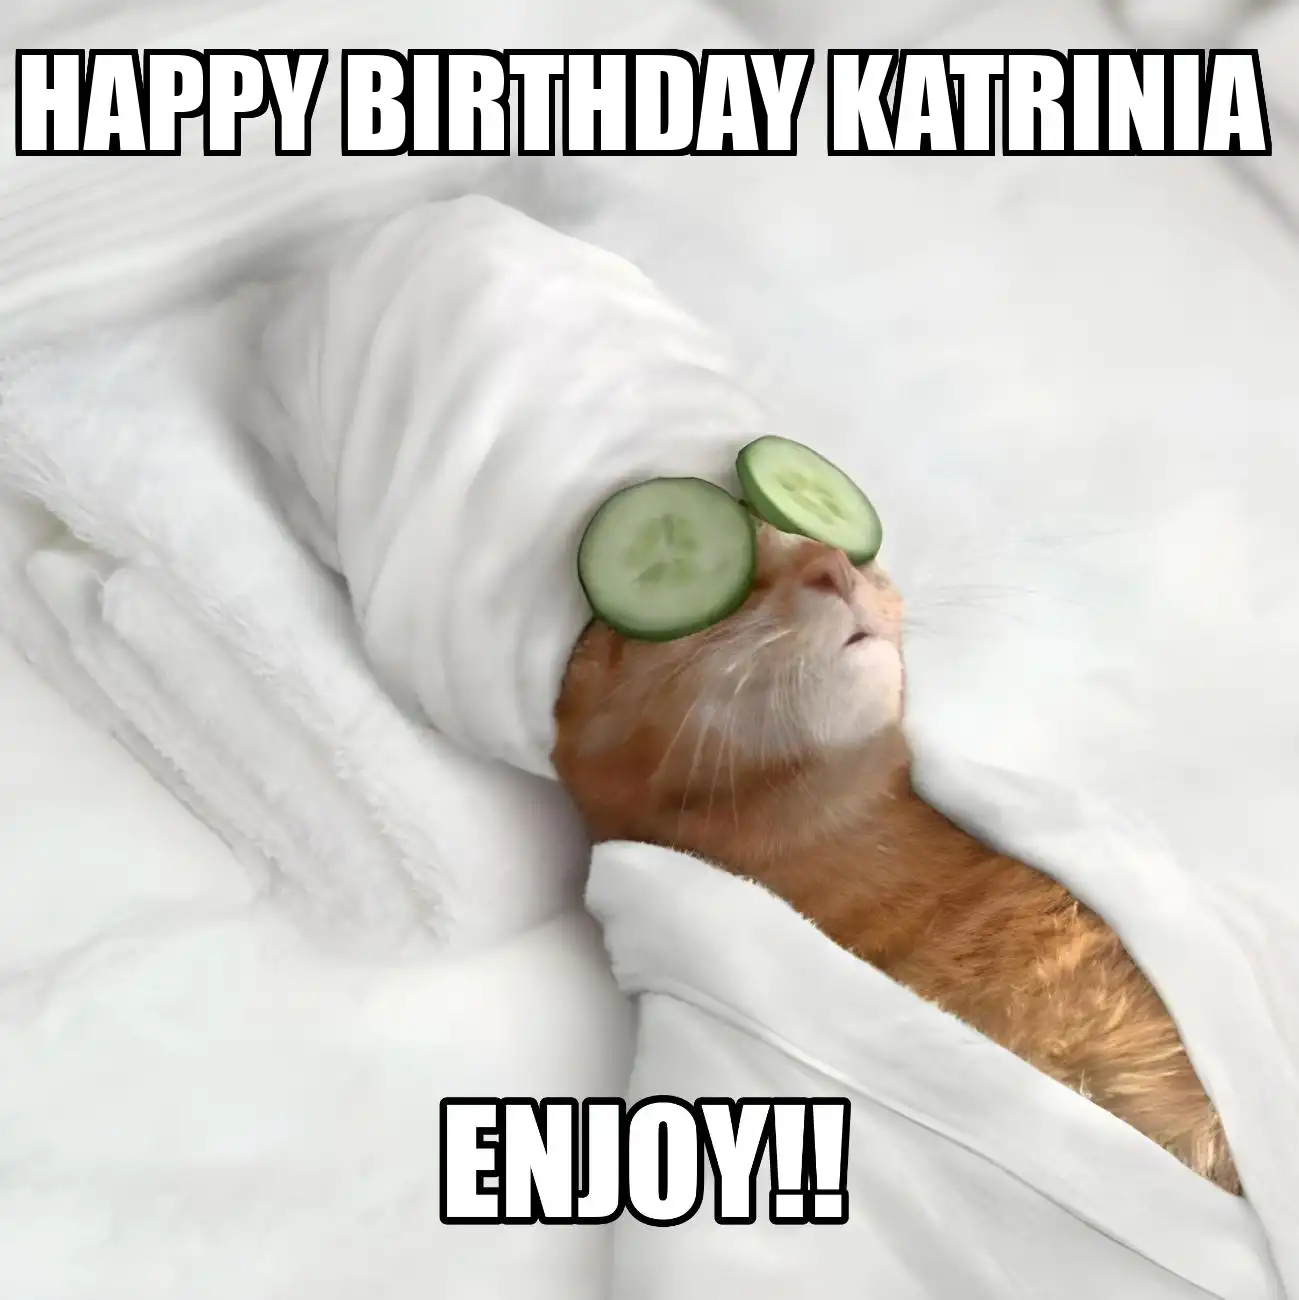 Happy Birthday Katrinia Enjoy Cat Meme